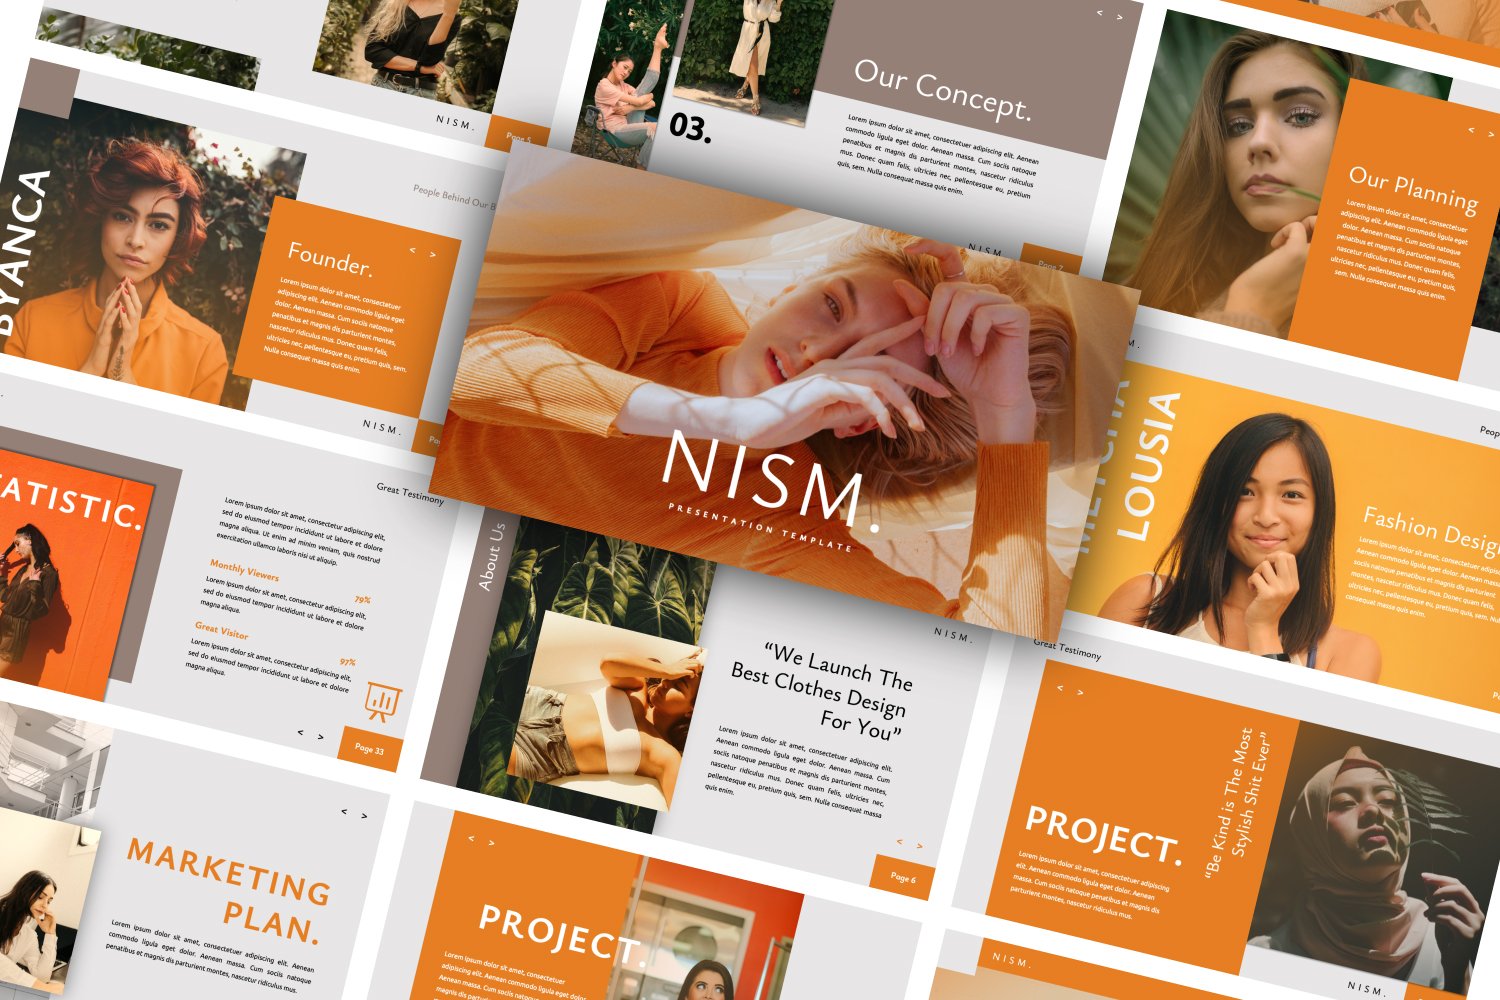 Nism Brand Google Slide